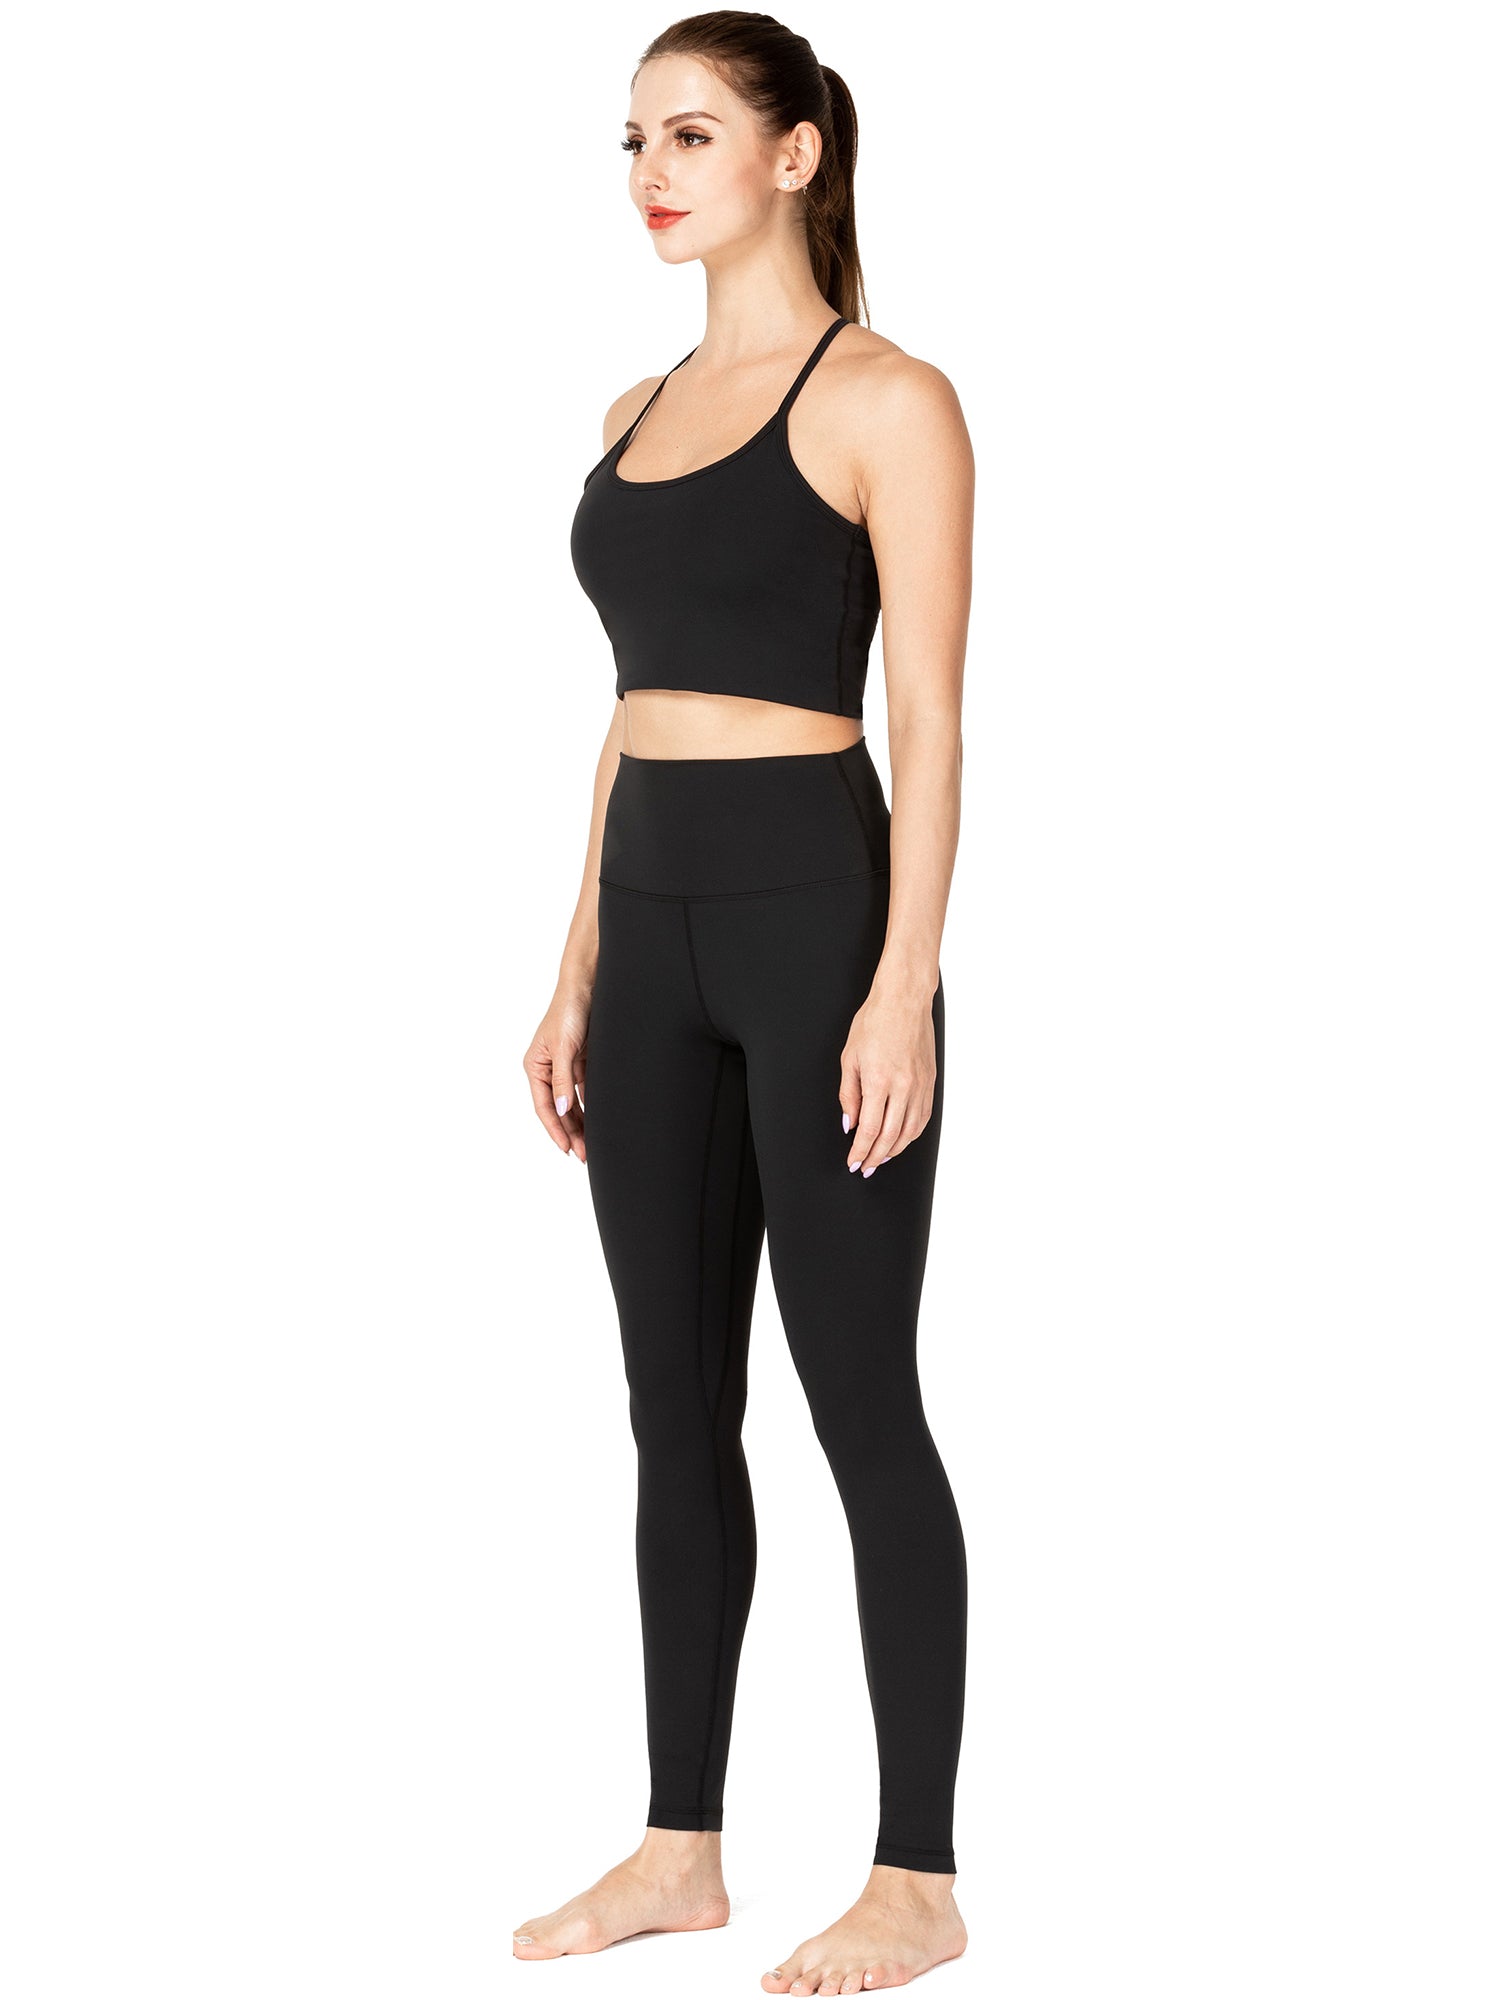 GetUSCart- Sunzel Workout Leggings for Women, Squat Proof High Waisted Yoga  Pants 4 Way Stretch, Buttery Soft Gray